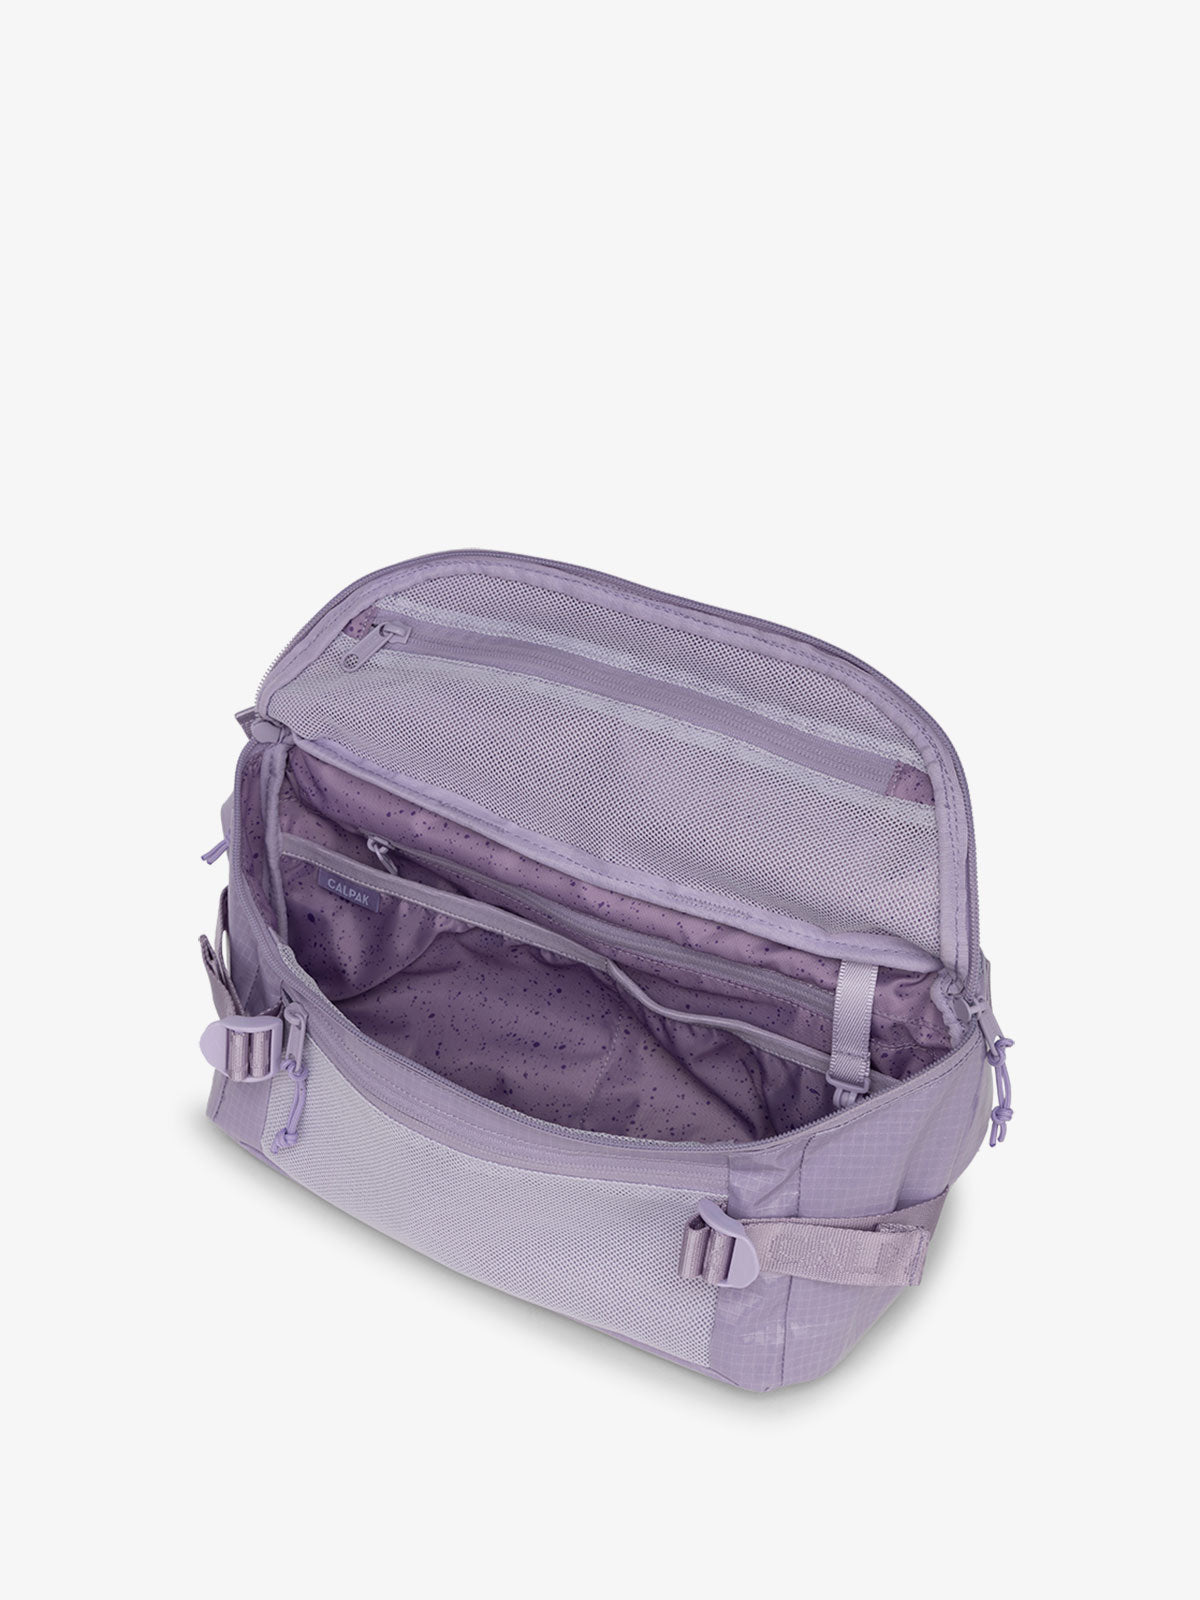 This Sling Bag Is Just $39 at Calpak